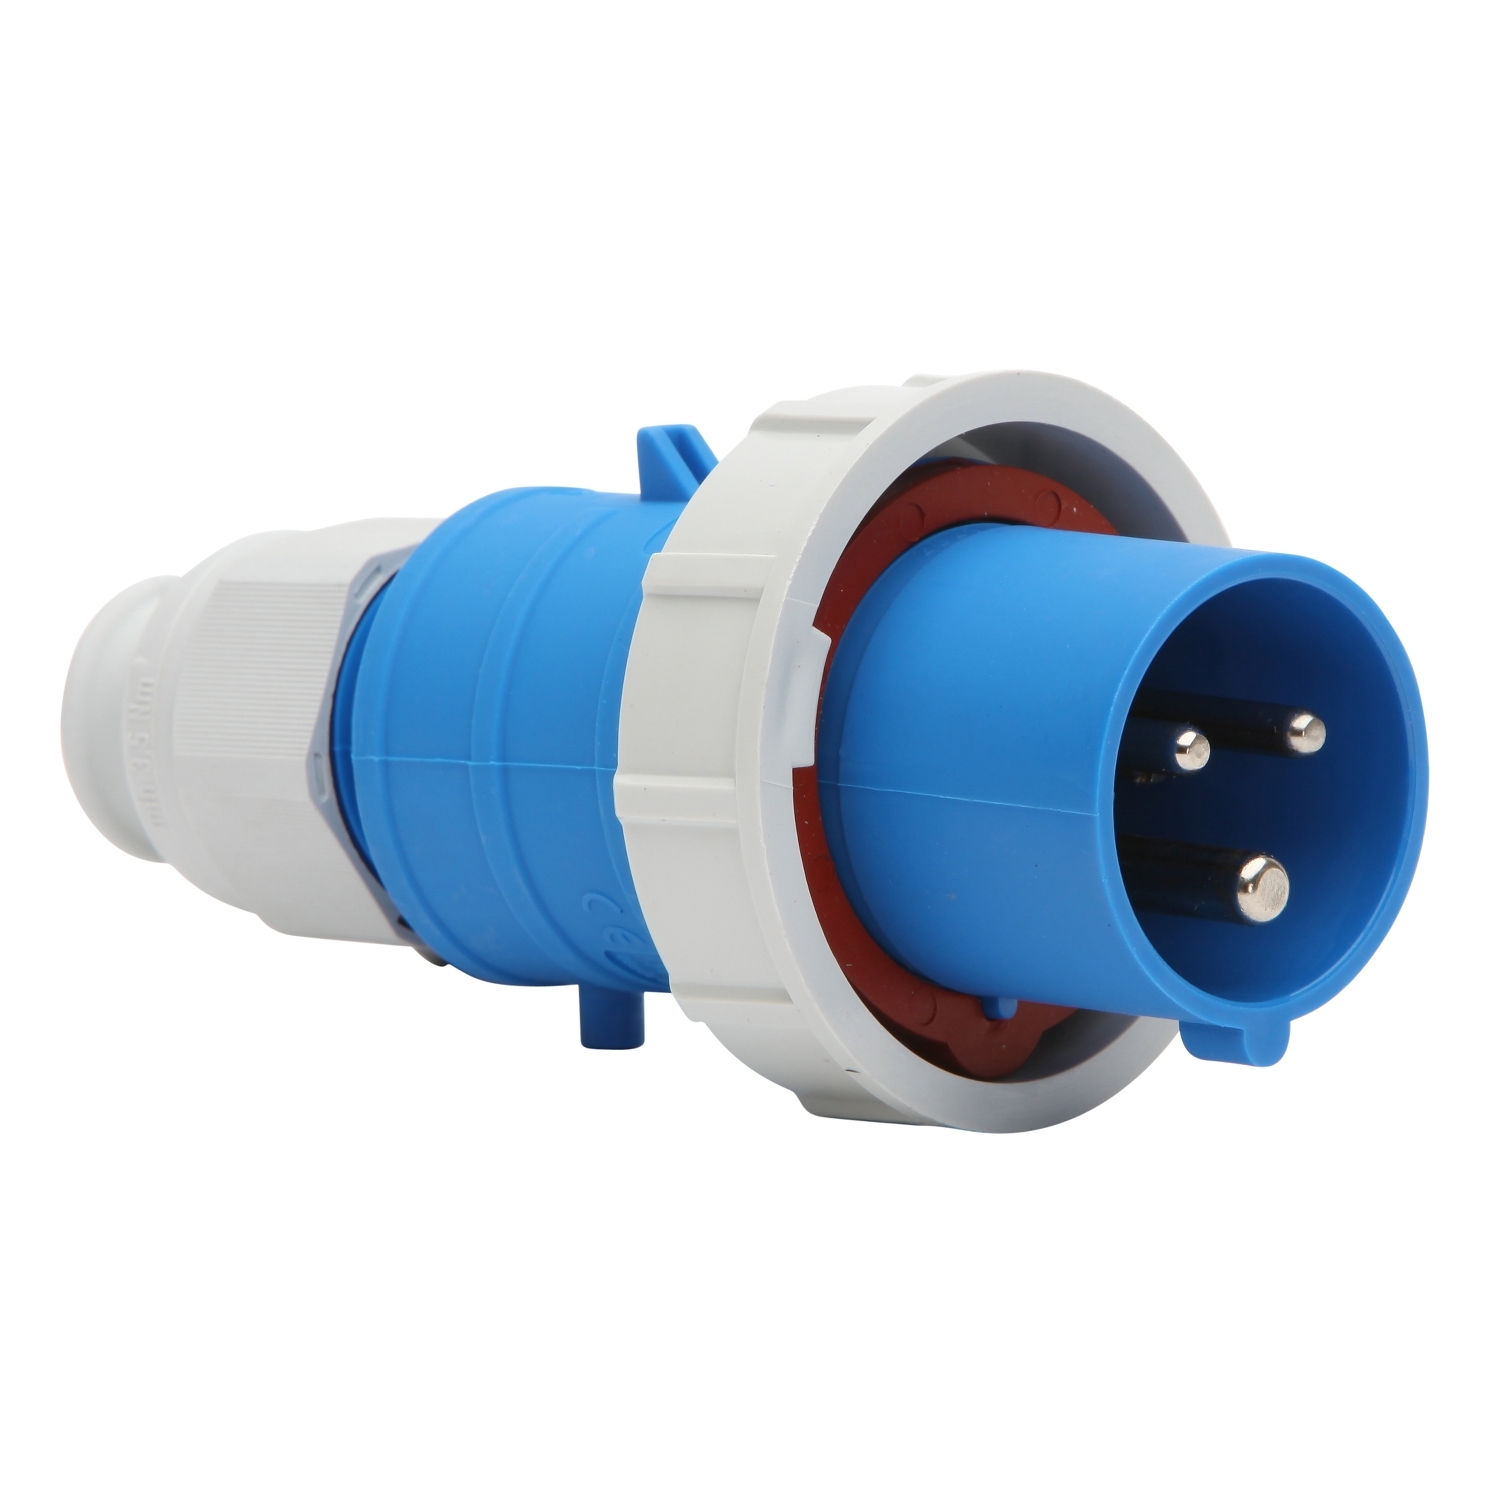 PDL BALS Plug 3-Round Pin 16A 230V 1-Phase IP67 - Blue